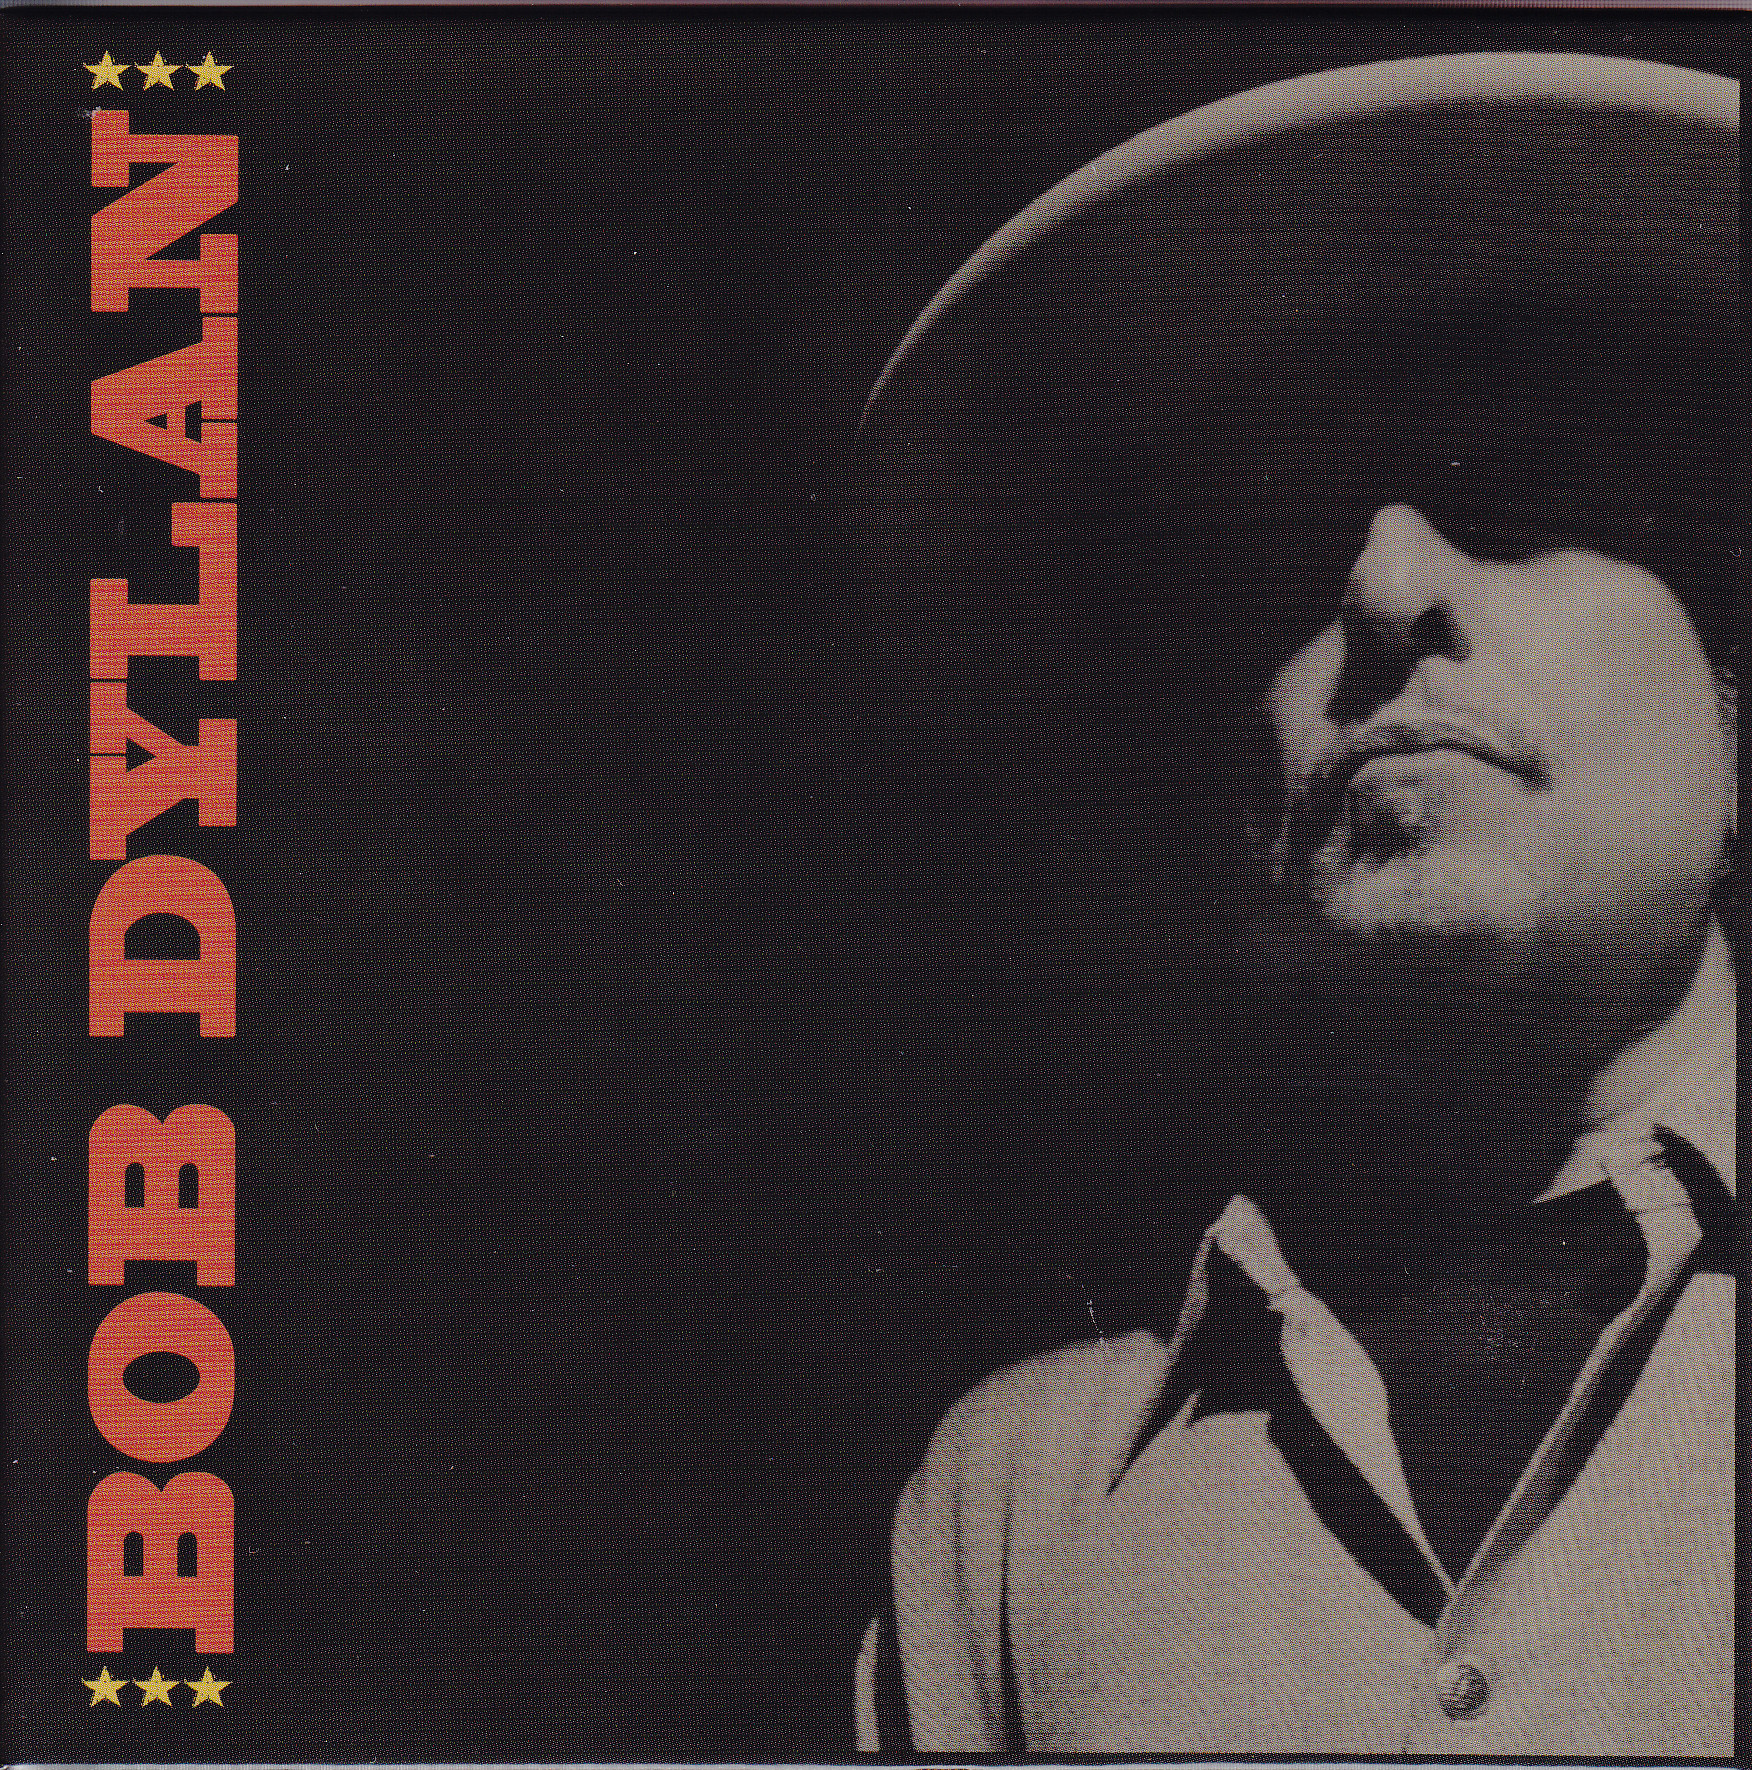 Bob Dylan / Never Ending Tour Japan Tour / 18CD +2DVD+2Bonus CD 